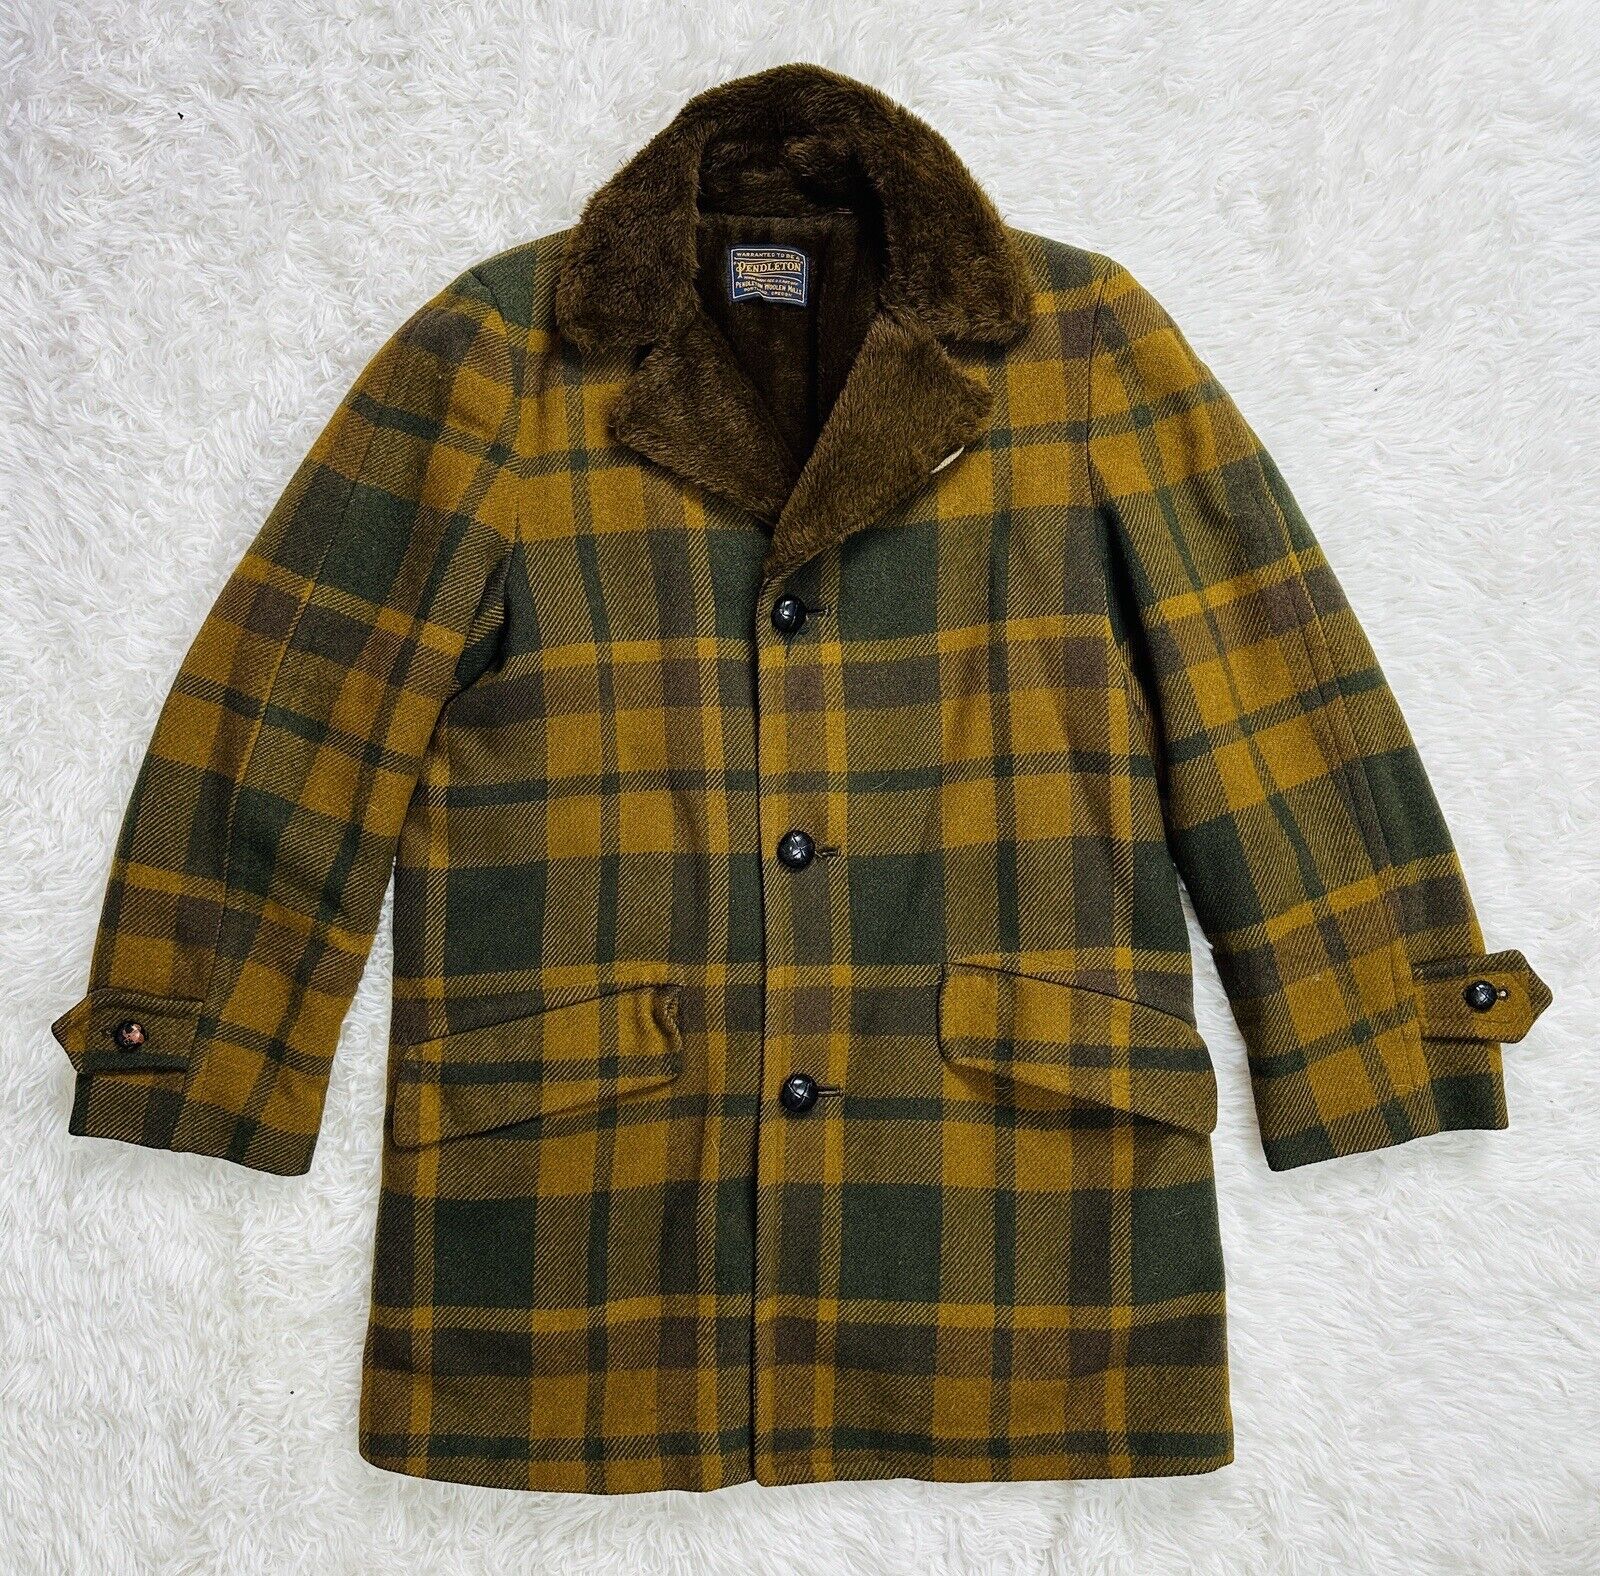 Vintage 1940’s/1950’s PENDLETON Wool Coat Size Medium/Large